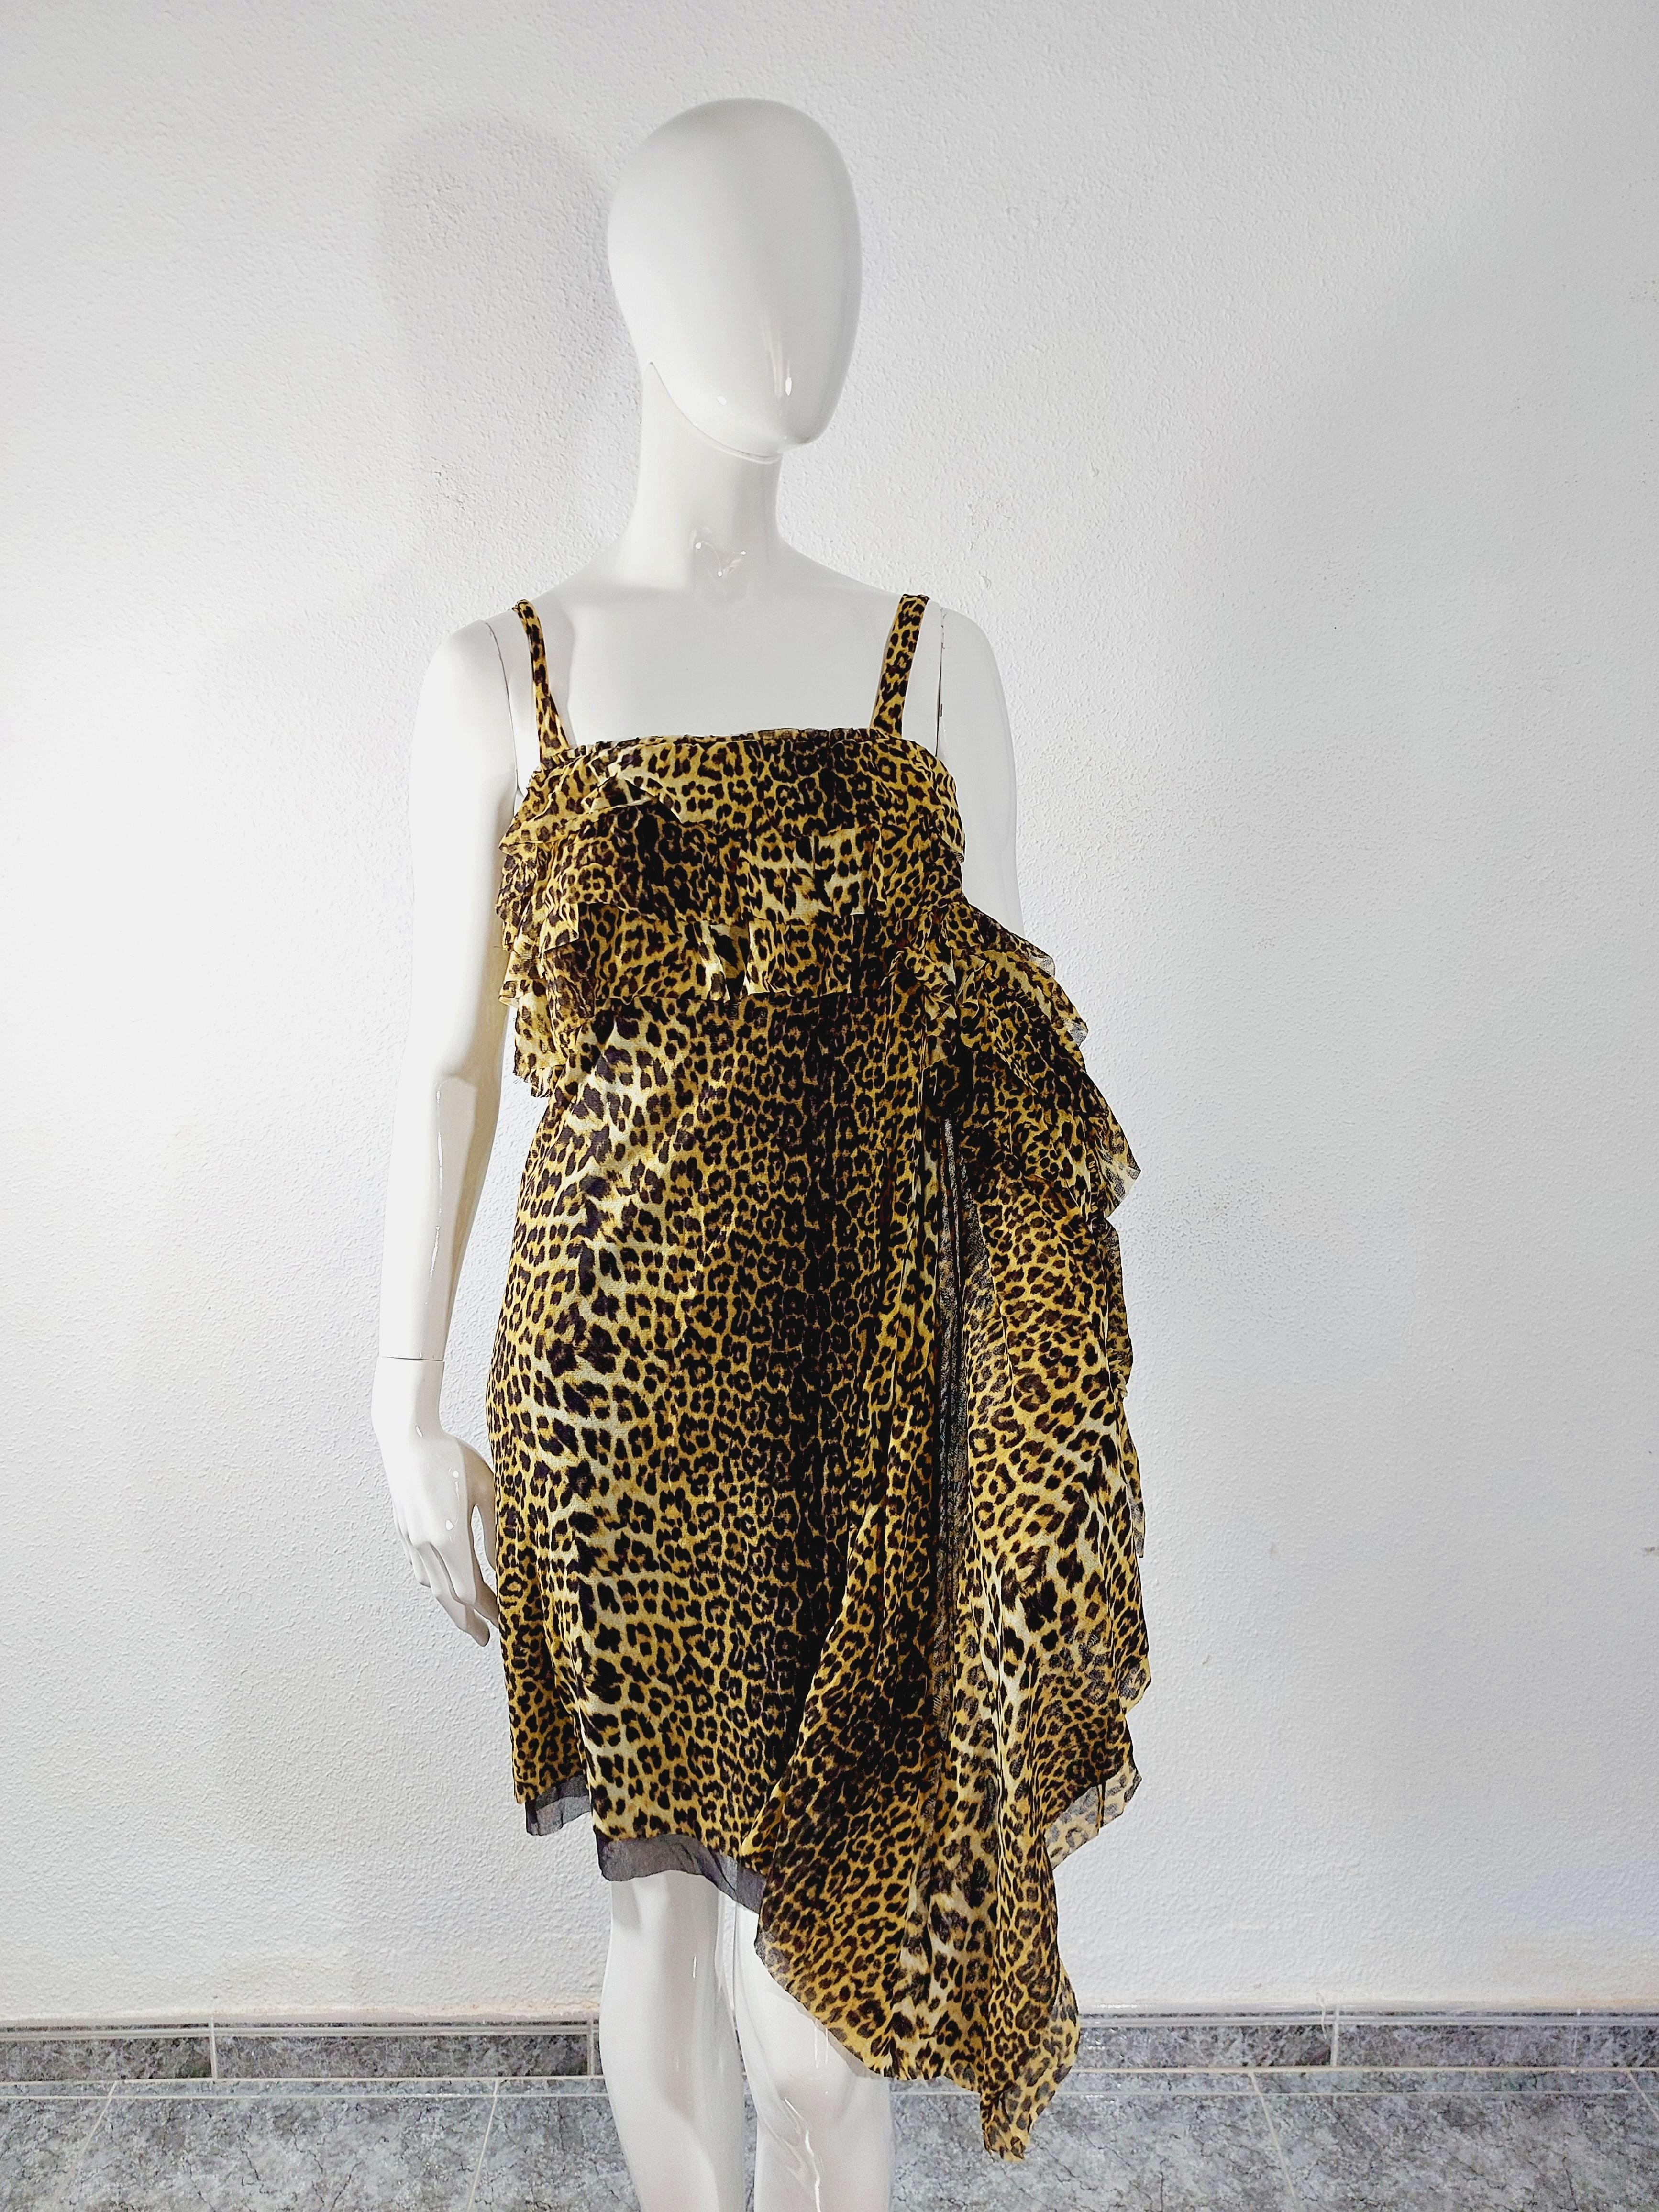 Jean Paul Gaultier 1990s Leopard Asymmetrical Cheetah Animal Mesh Ruffled Dress For Sale 8